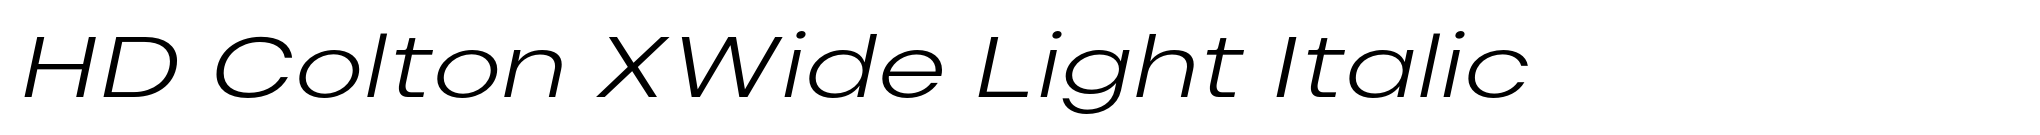 HD Colton XWide Light Italic image